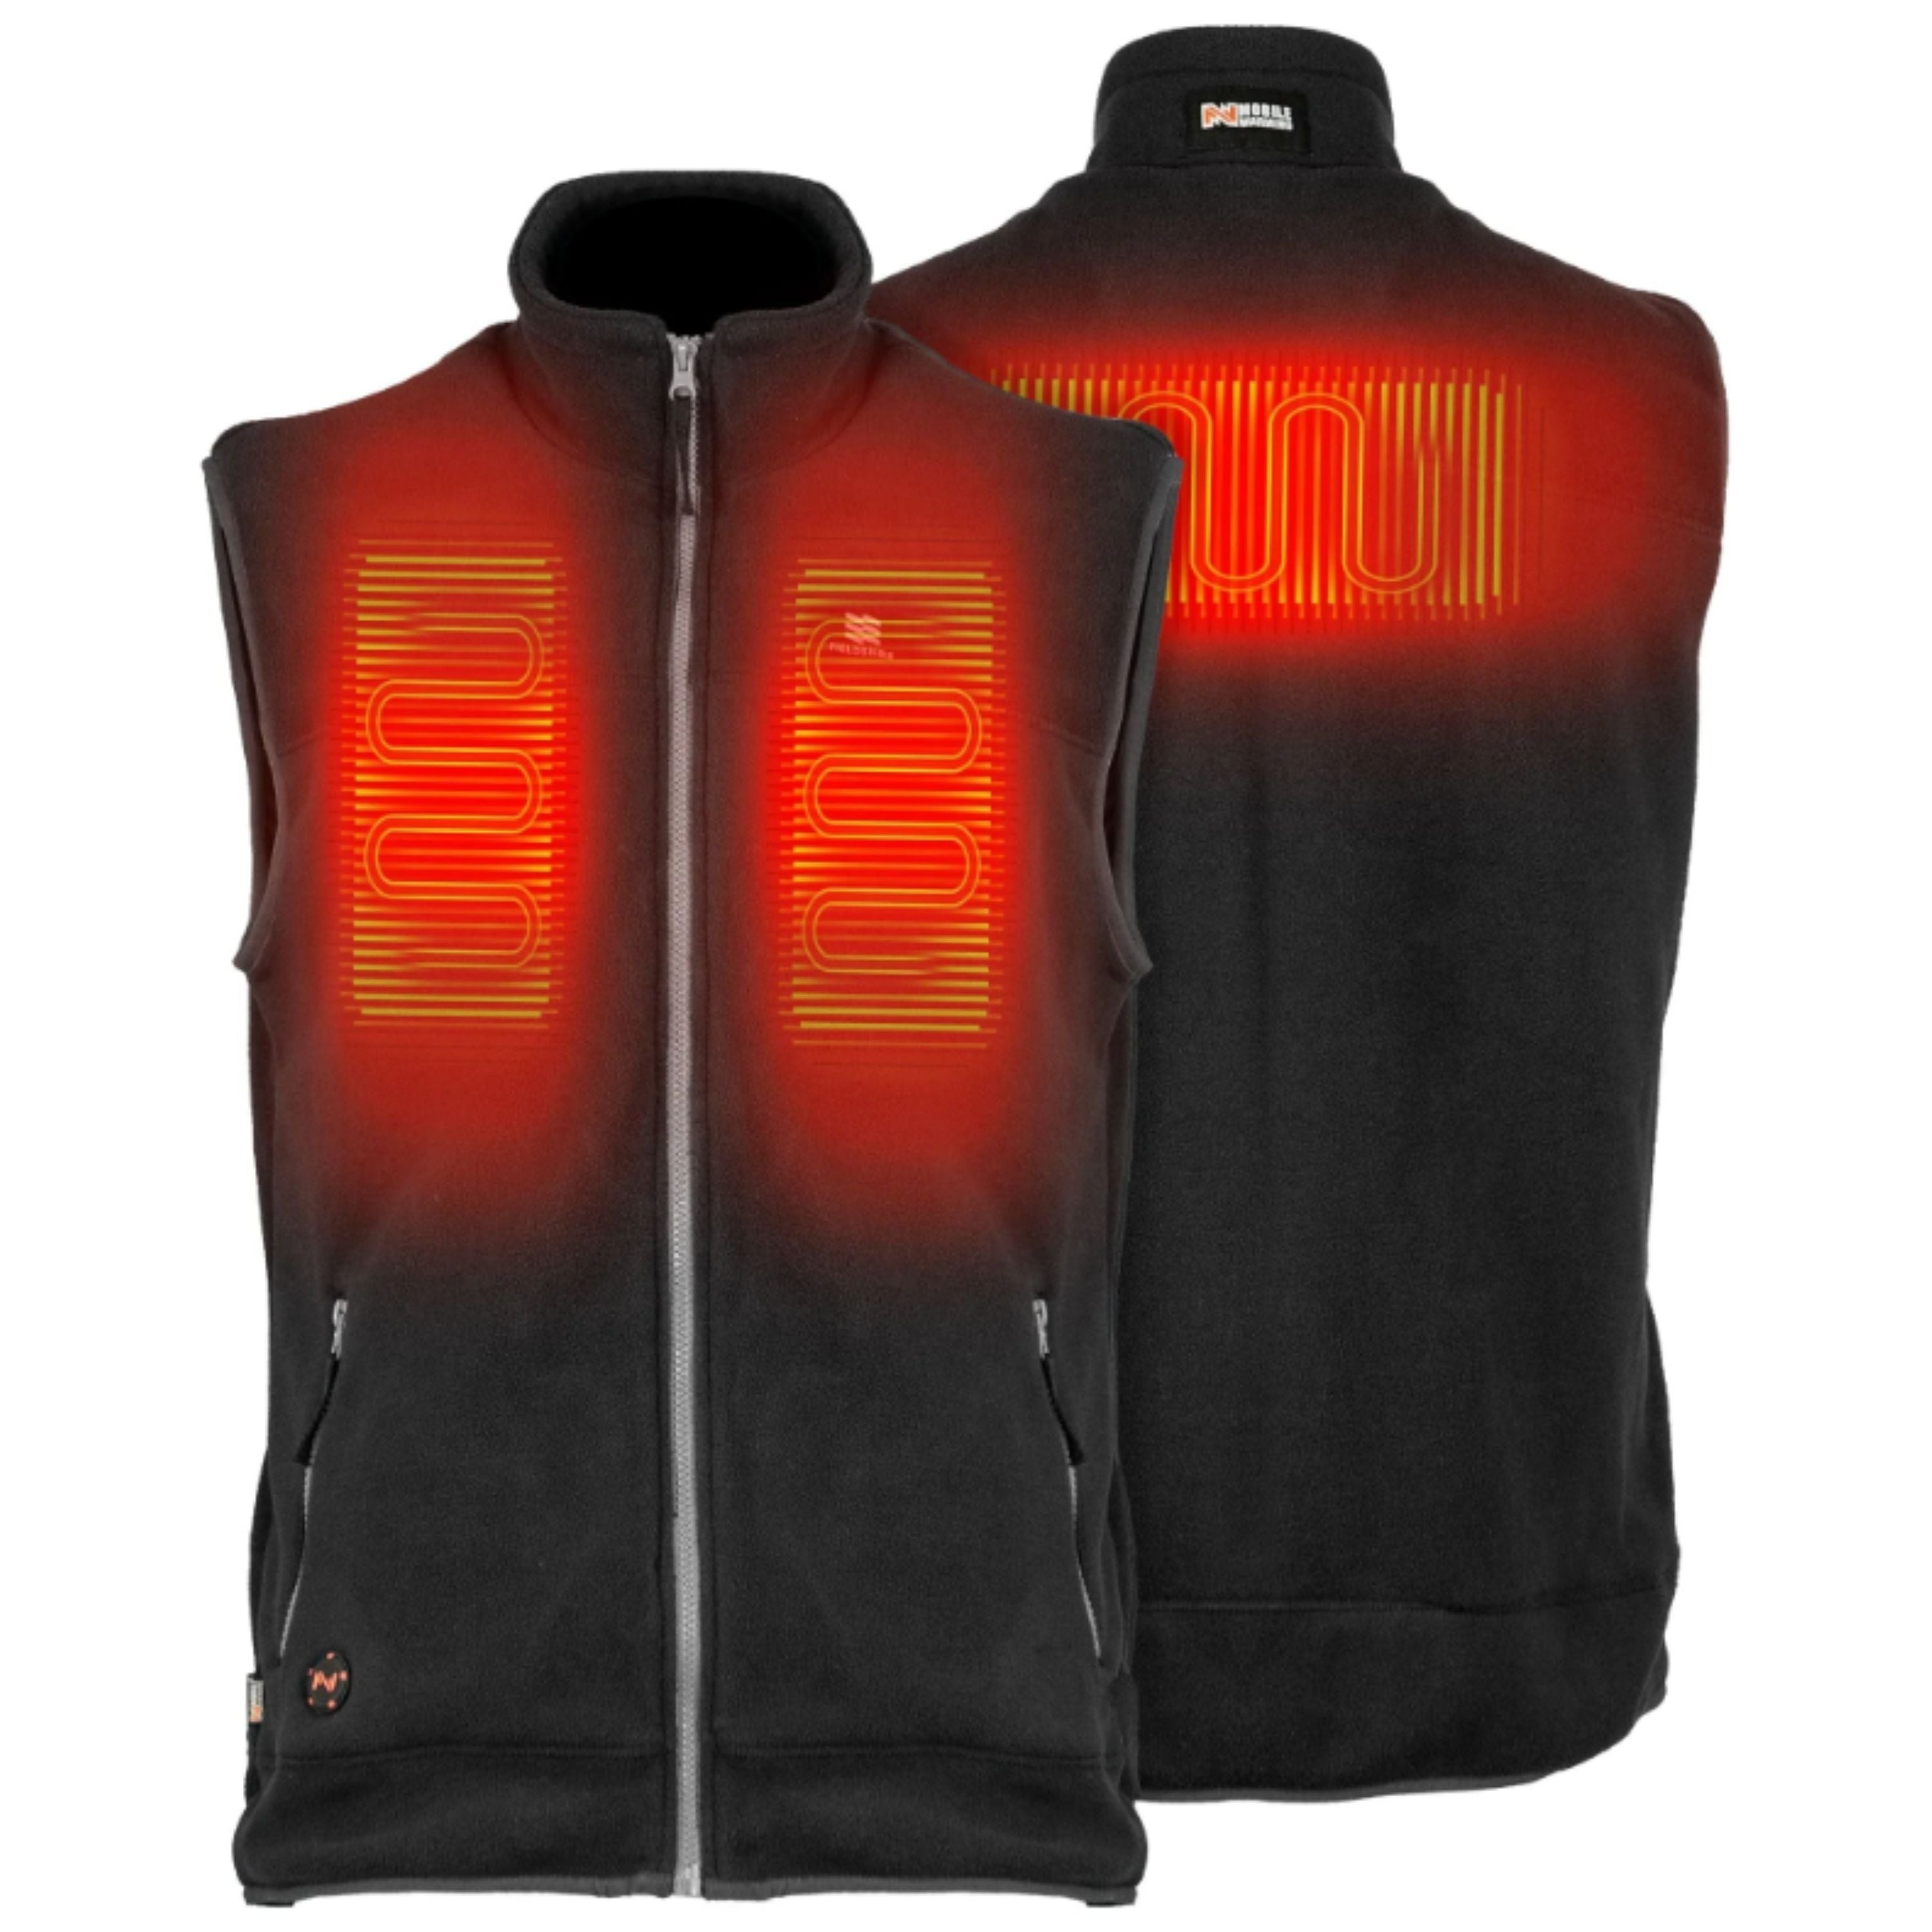 "TREK" Heated fleece sleeveless vest - Men's